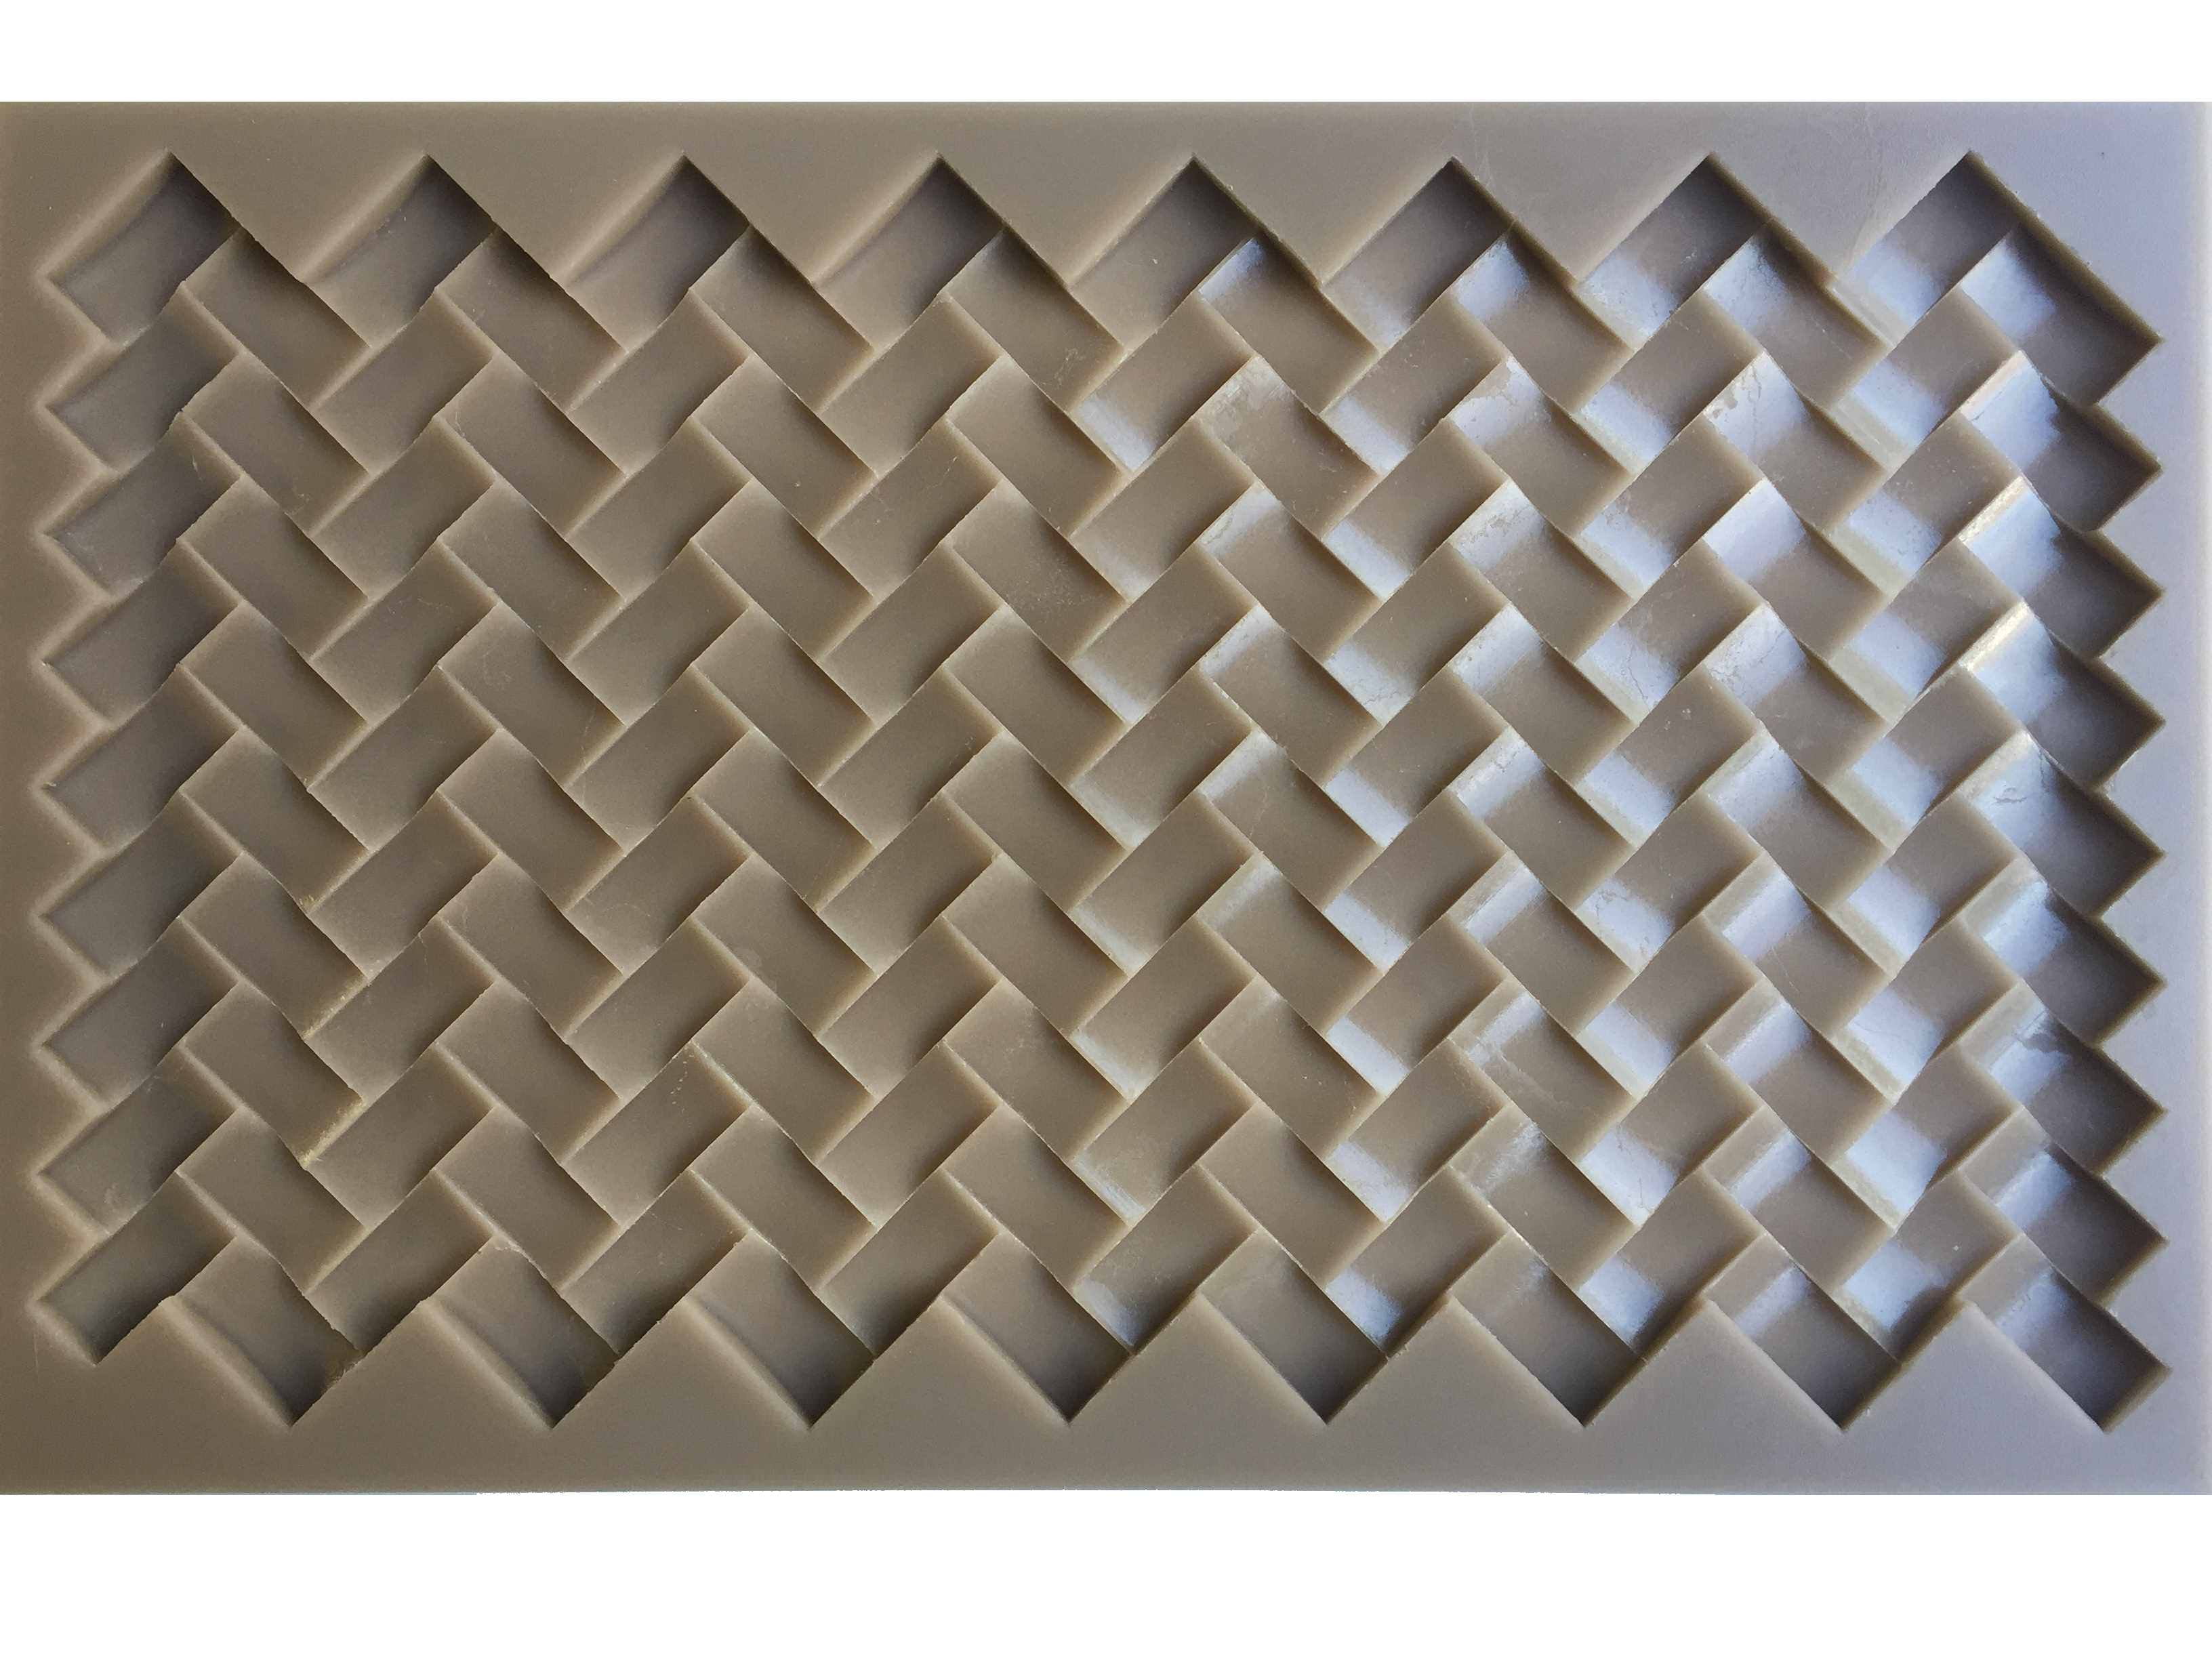 Shell plastic travertine tile mold reusable casting mould 